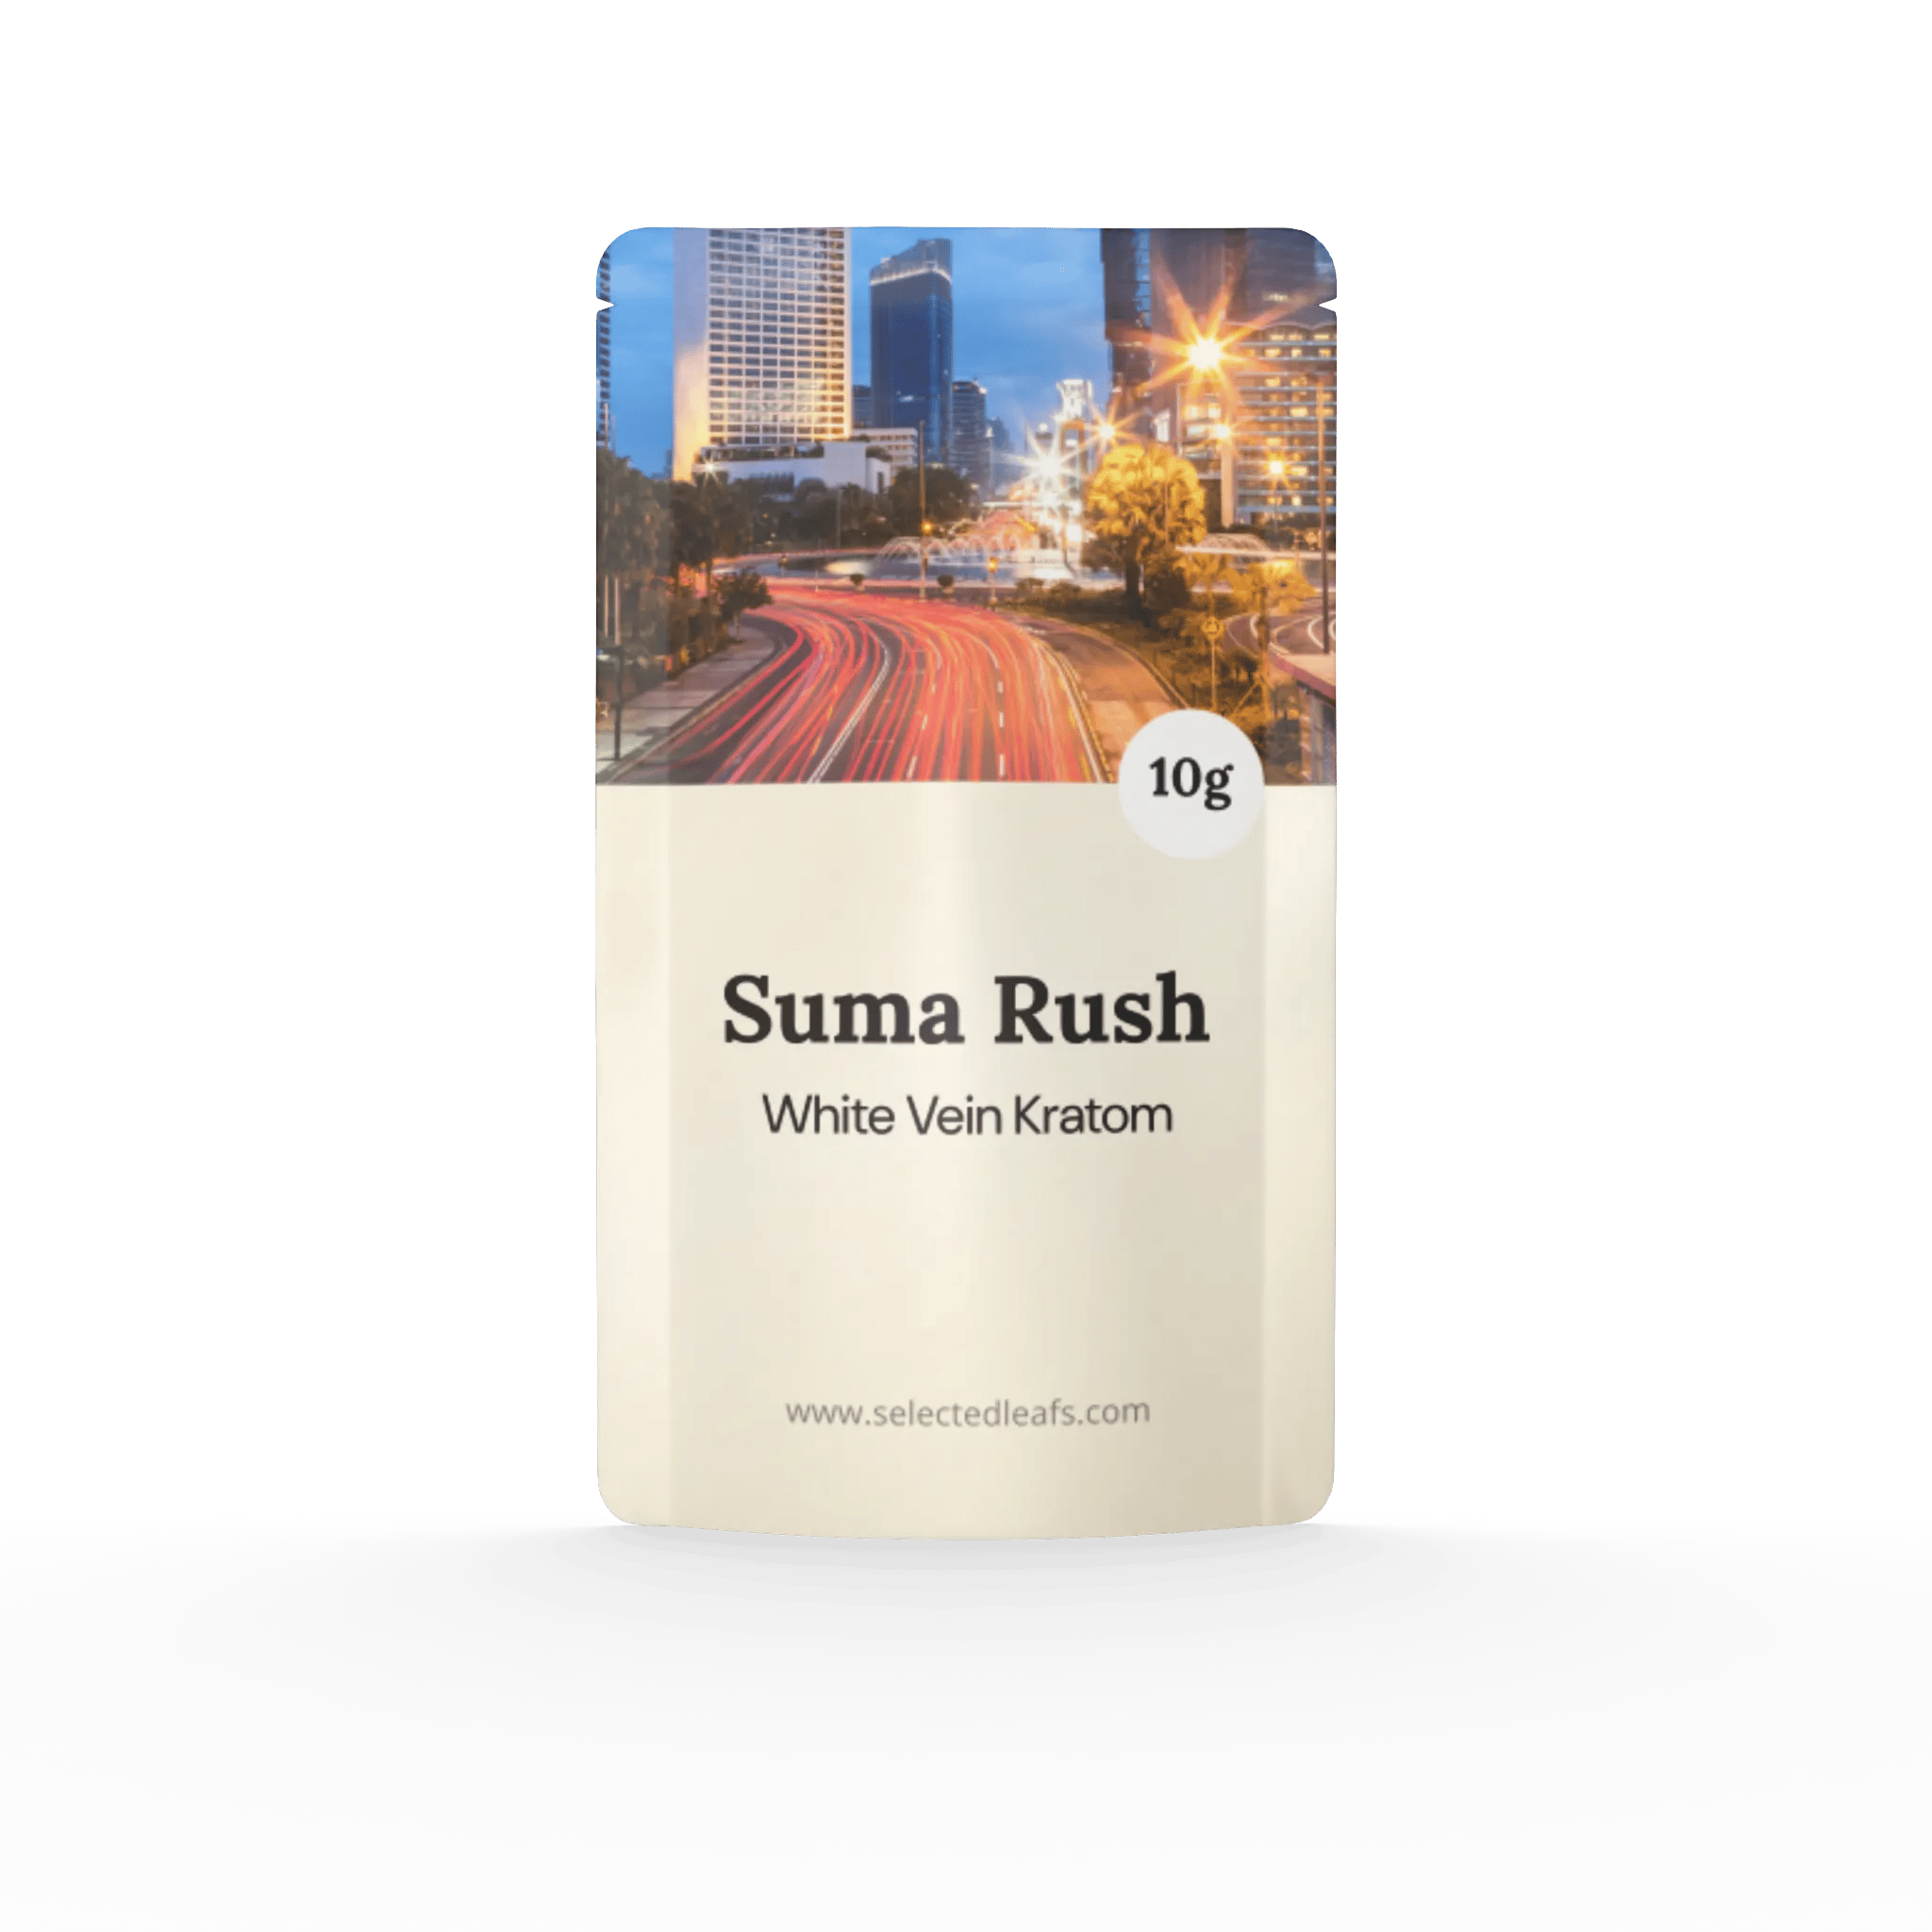 Suma Rush